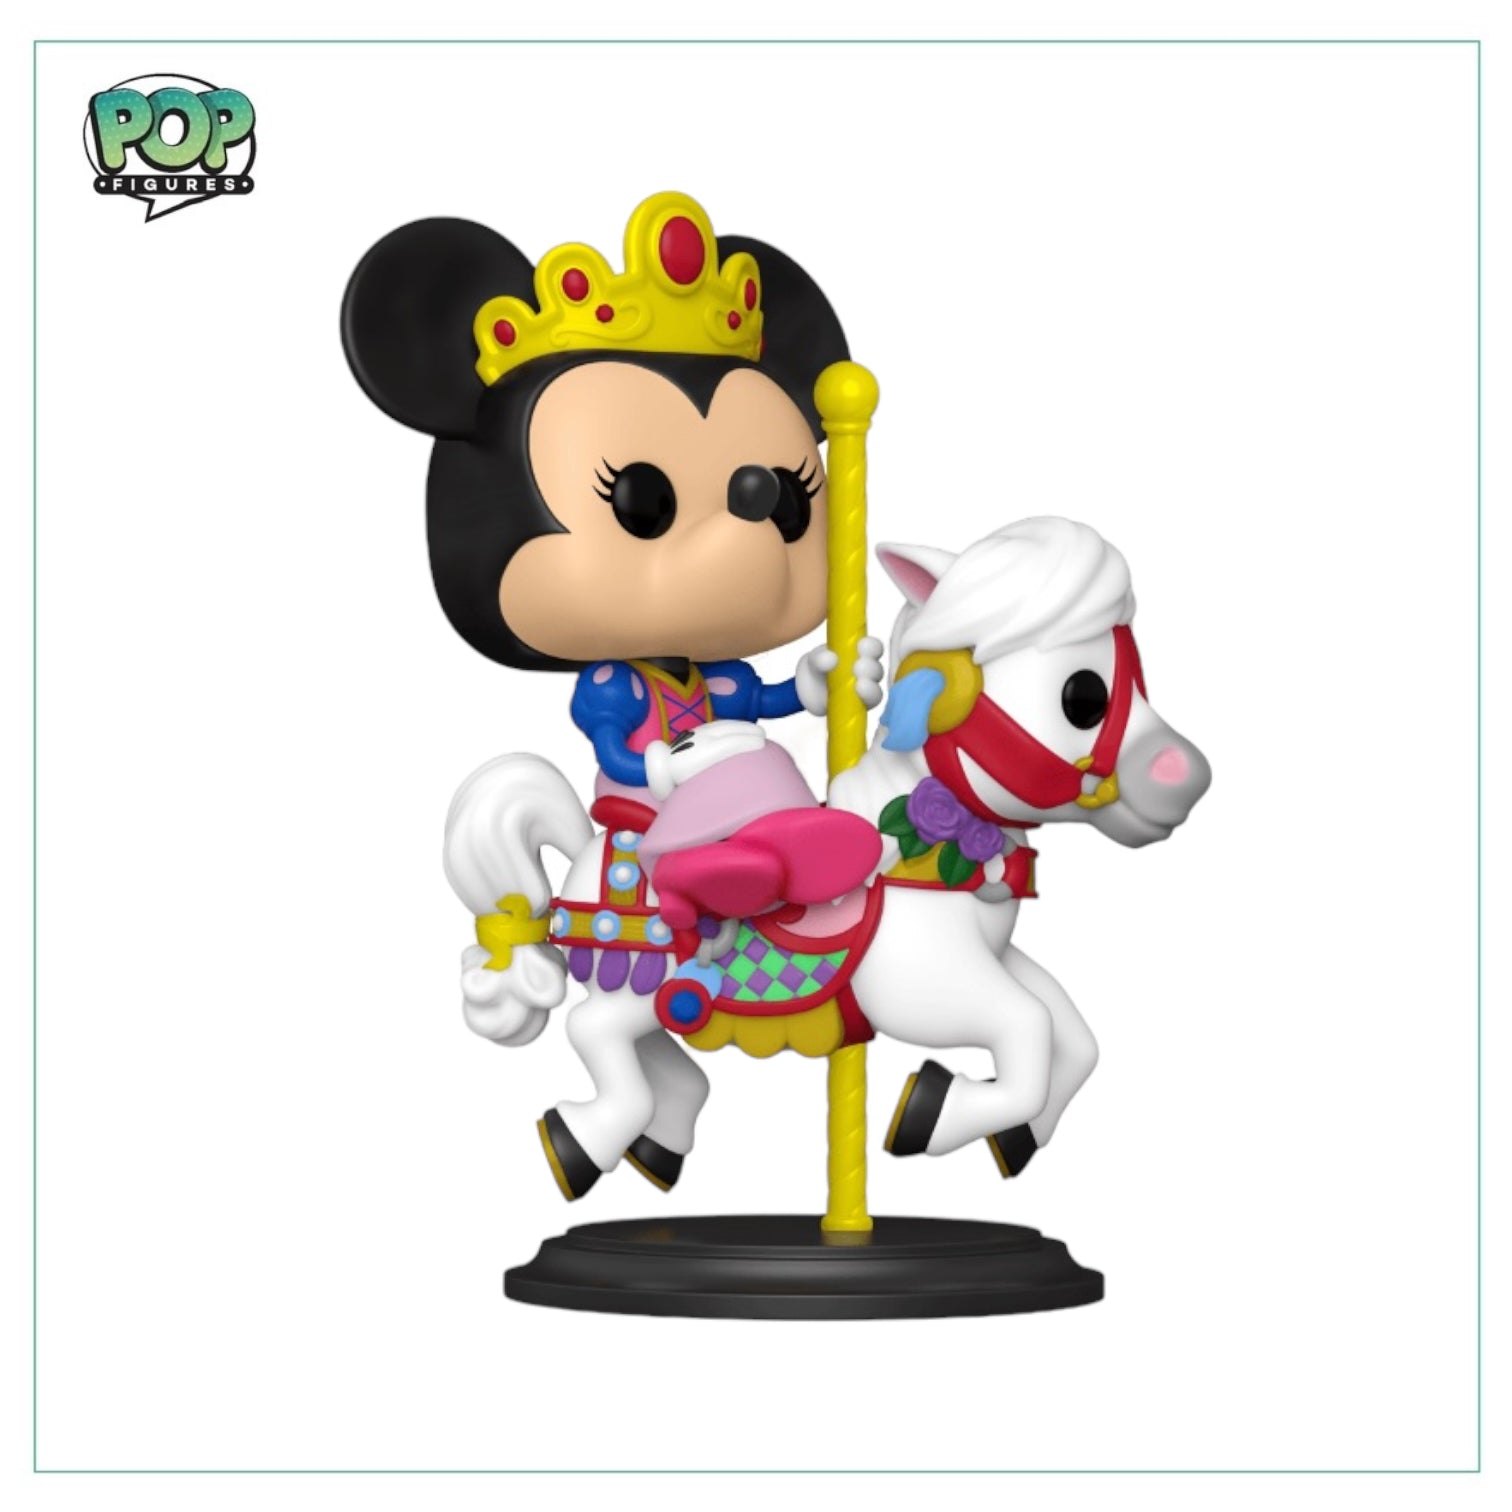 Minnie Mouse on Price Charming Regal Carrousel #1251 Funko Pop! - Walt Disney World 50th